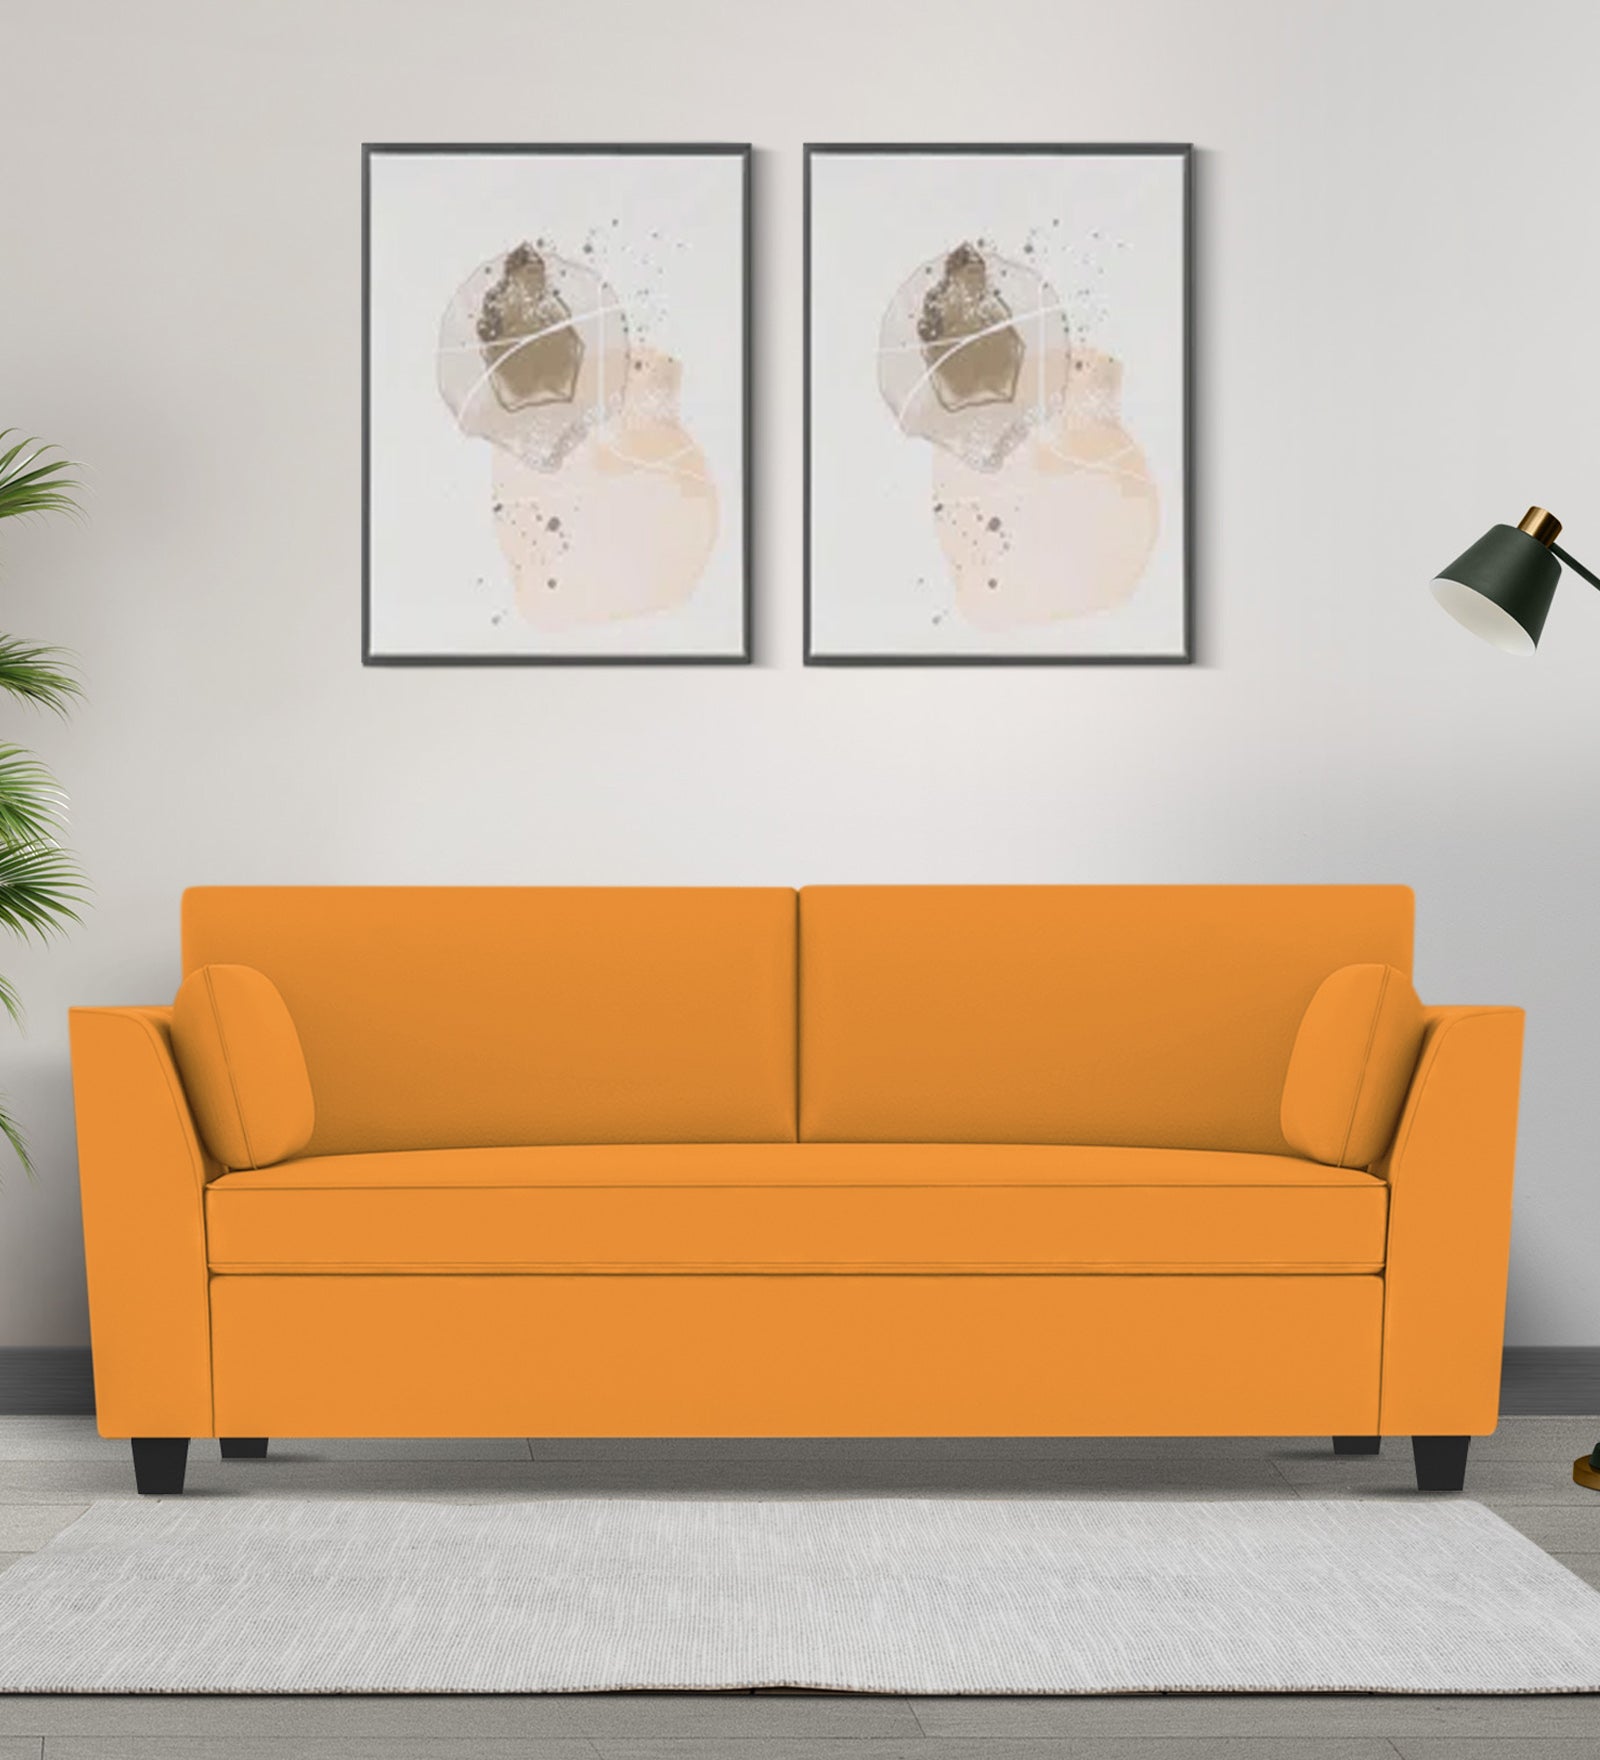 Bristo Velvet 3 Seater Sofa in Tangerine orange Colour With Storage